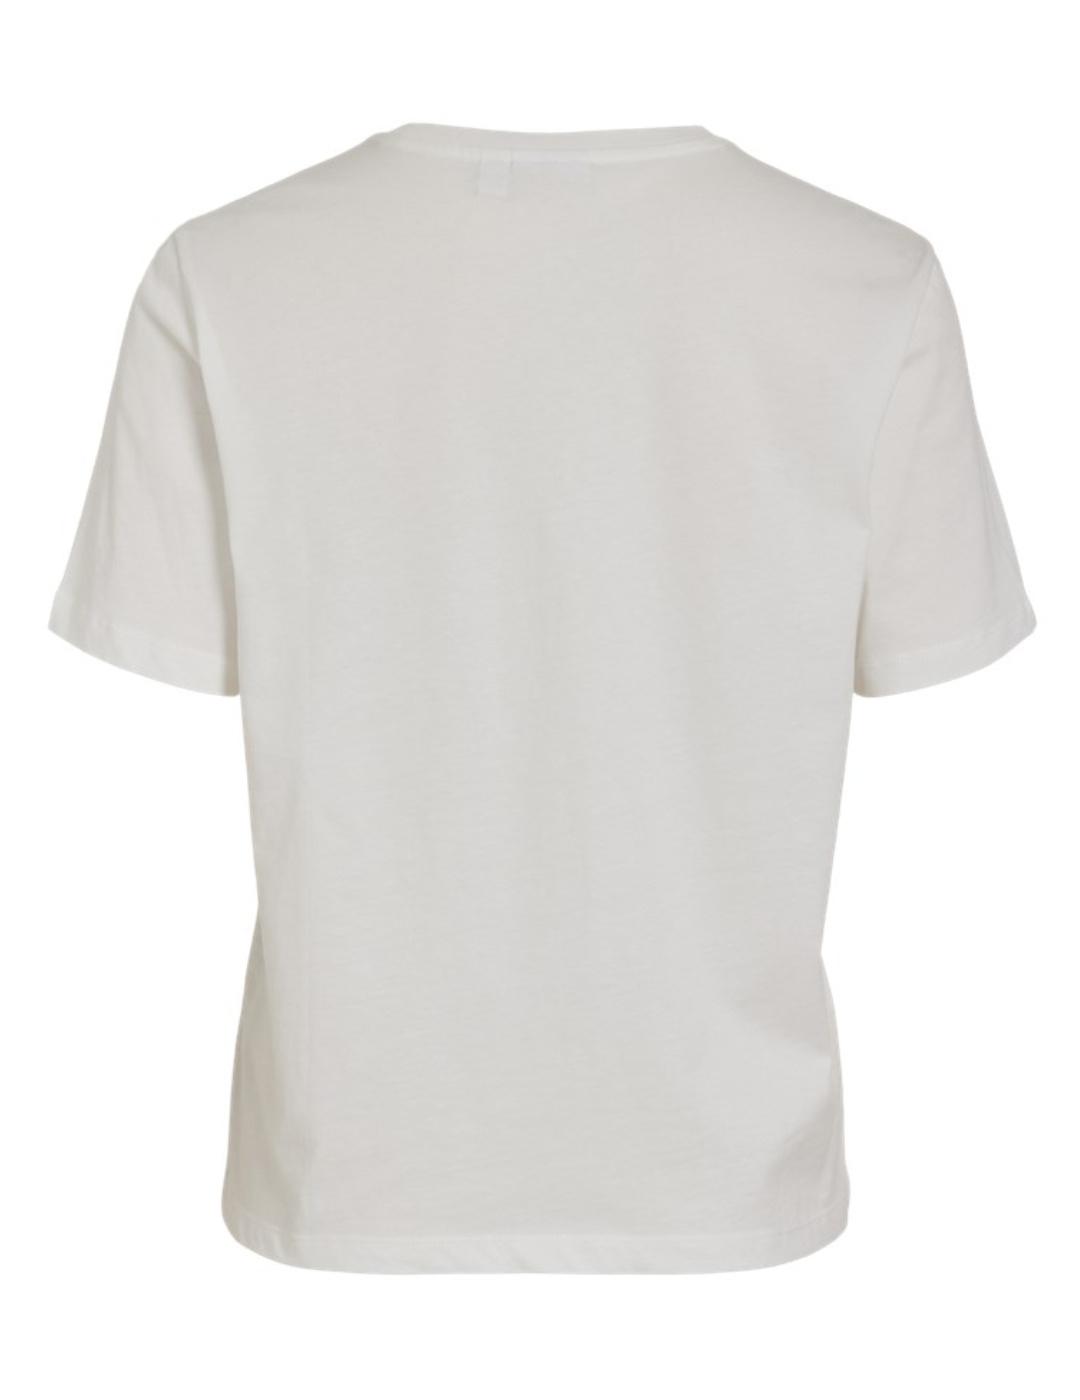 Camiseta Vila Bil blanca letras verdes manga corta de mujer